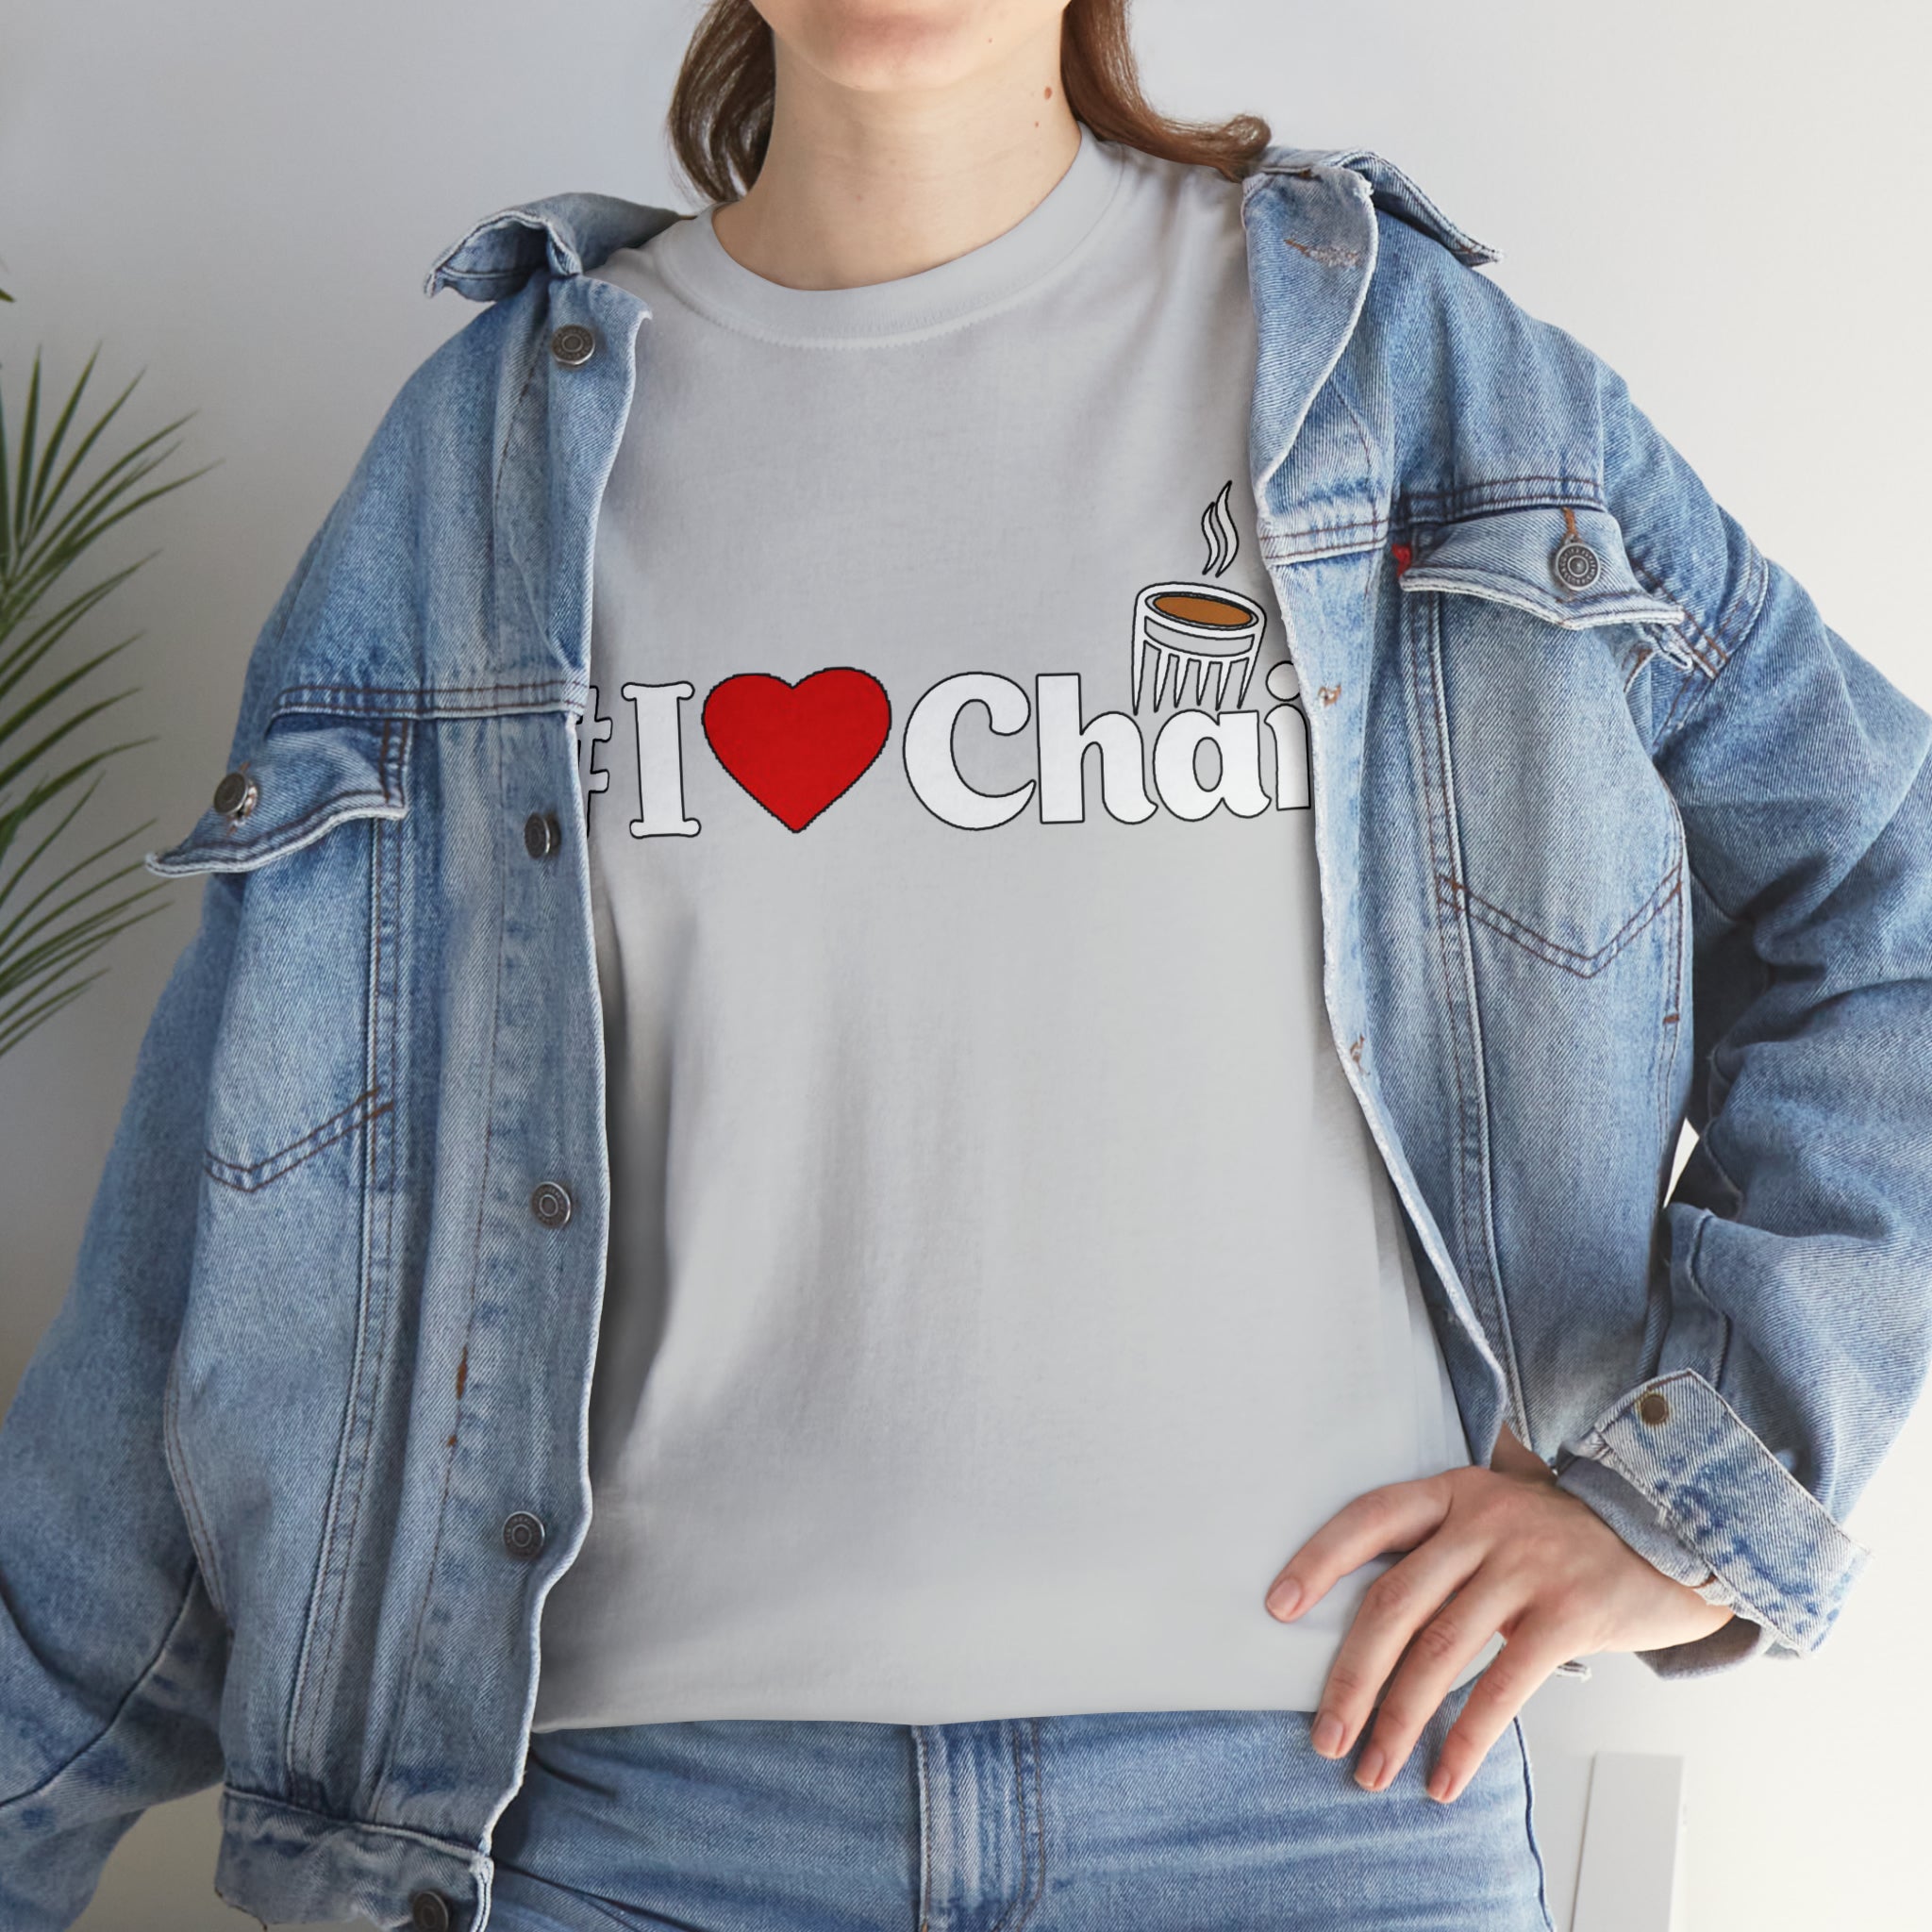 I Love Chai T-Shirt Design by C&C